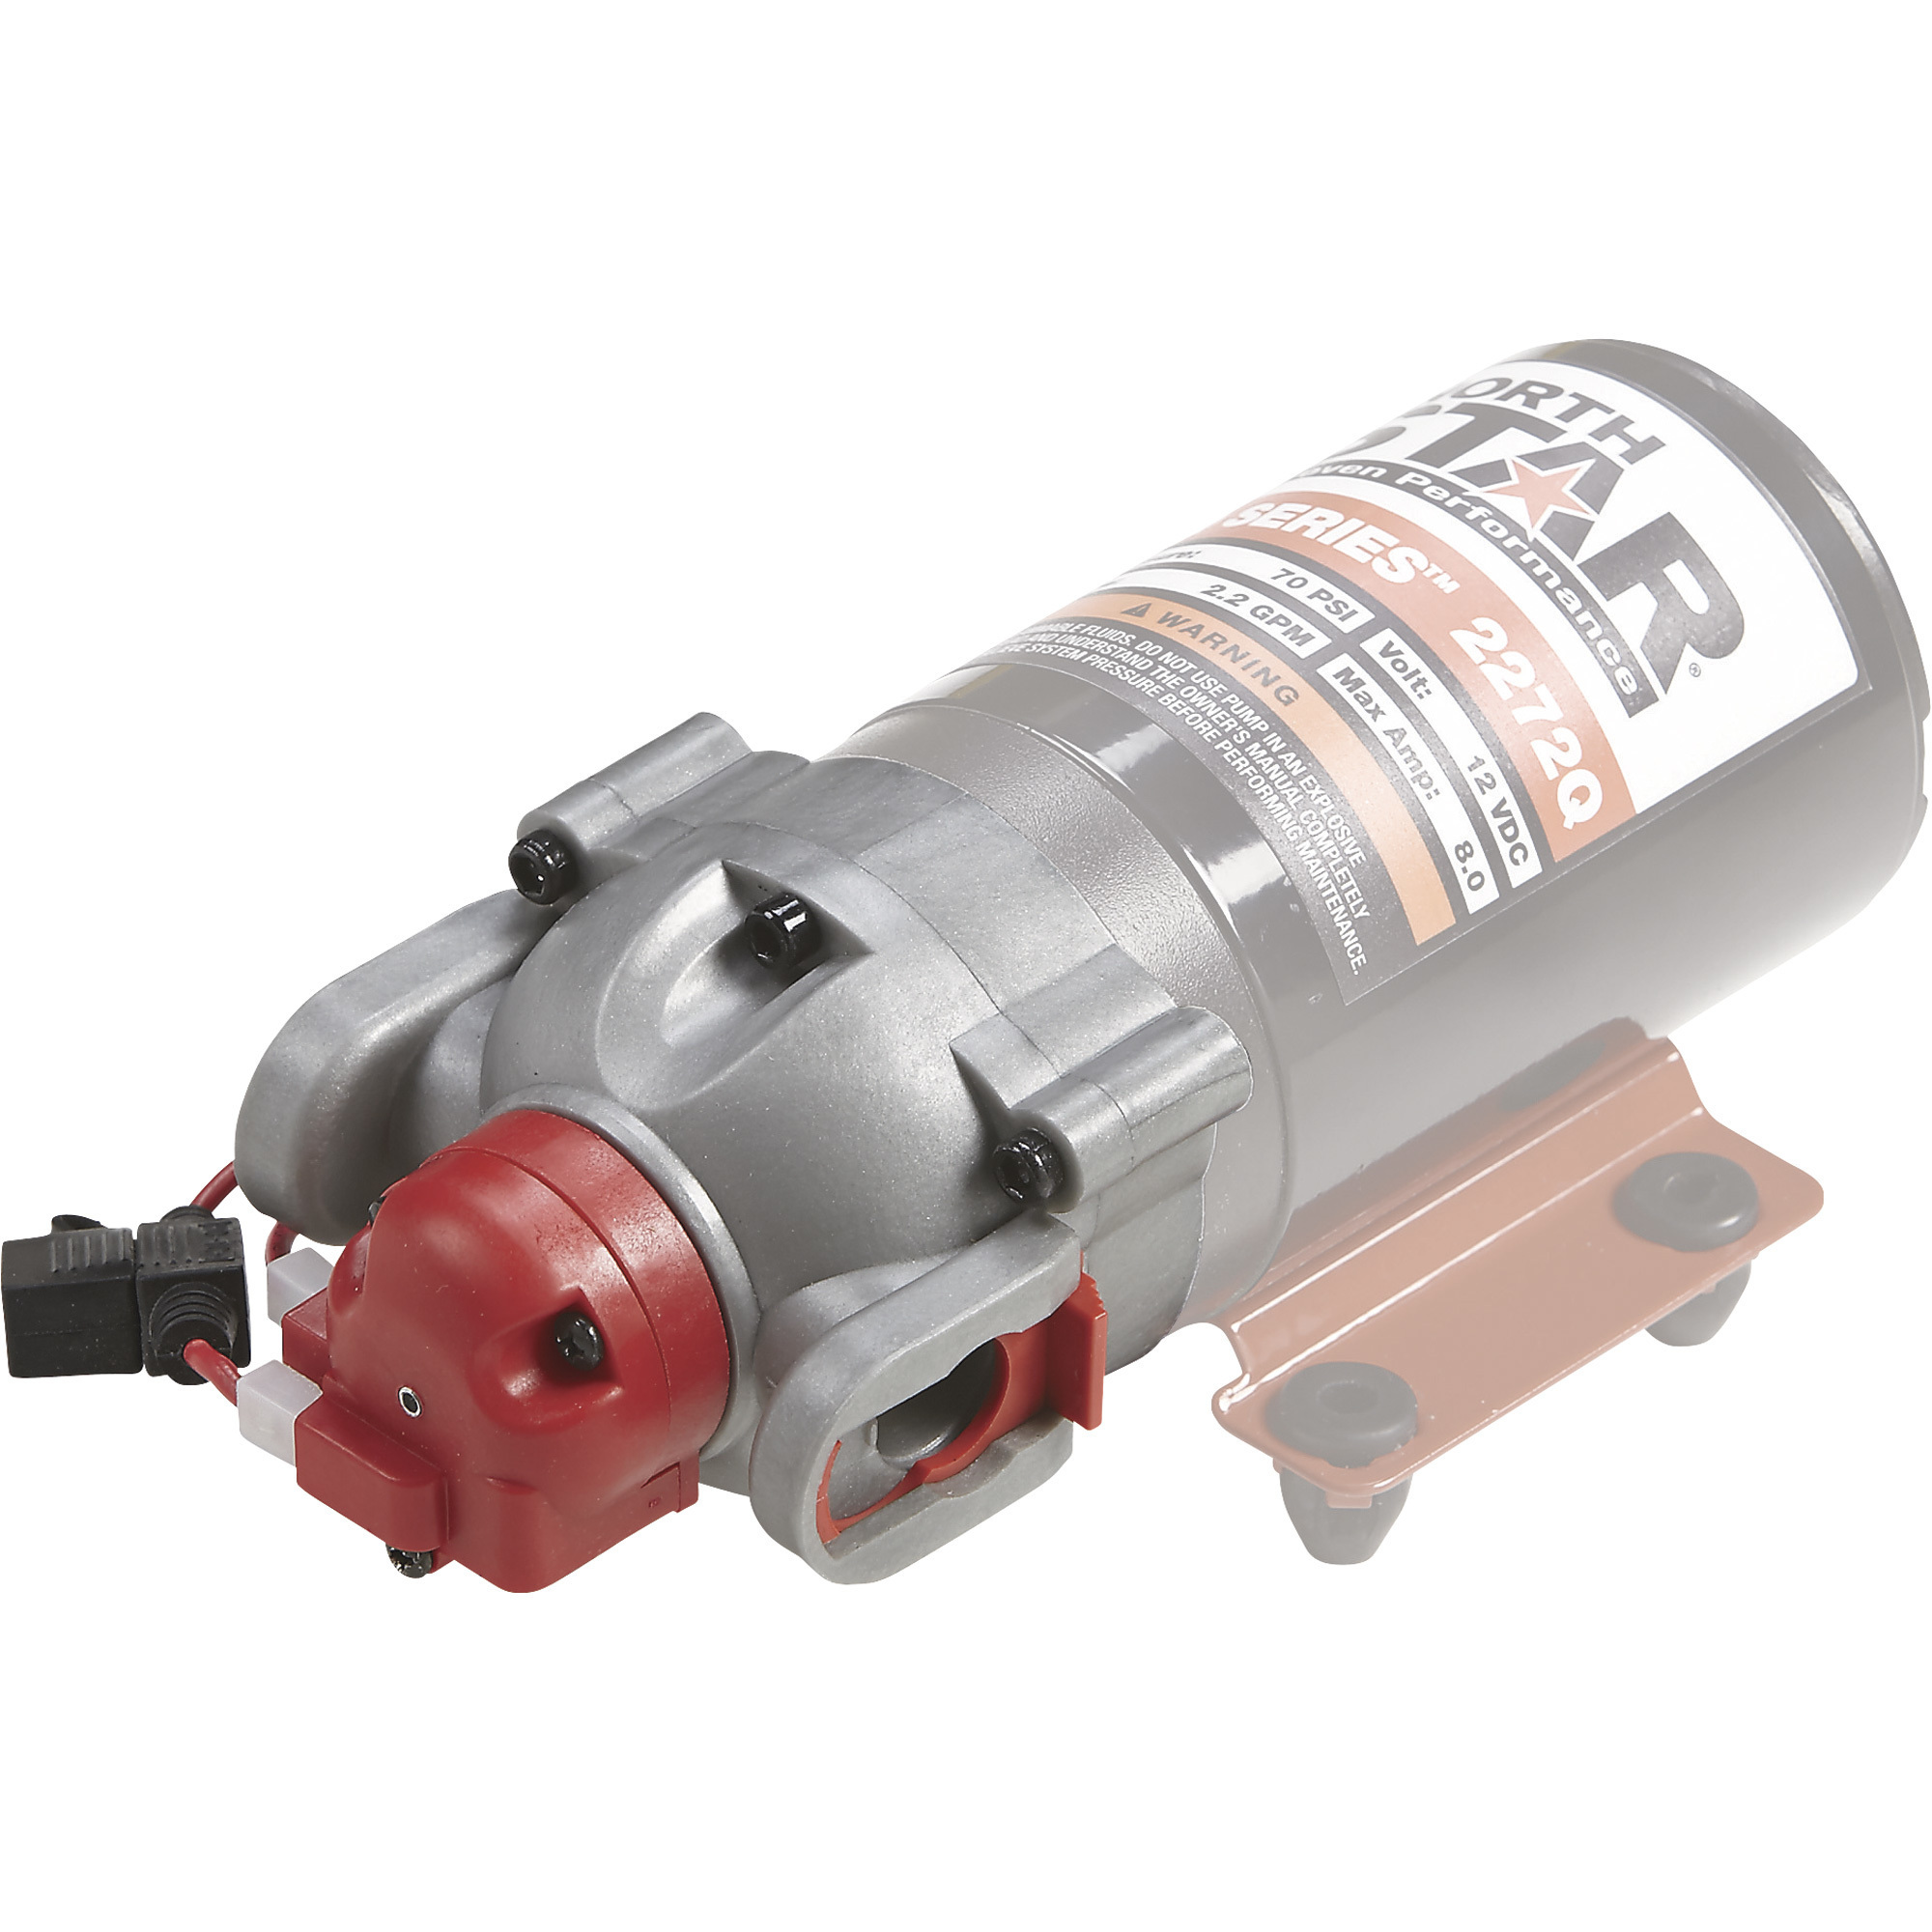 NorthStar Replacement Sprayer Pump Head â 2.2 GPM, 70 PSI, 3/4Inch Quick-Connect Ports, Model A2682272